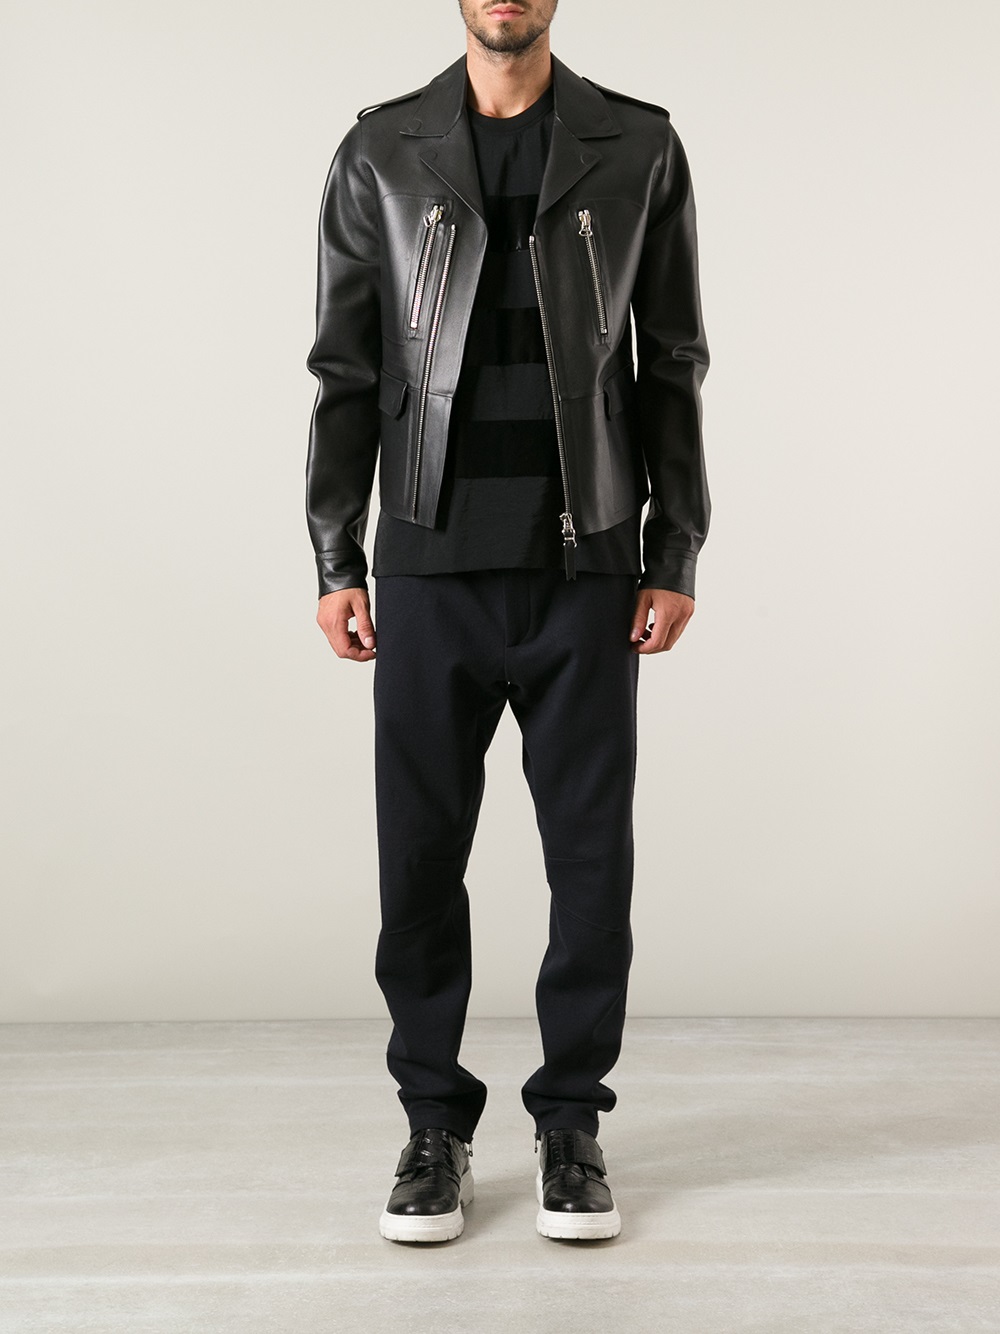 Lyst - Lanvin Zipup Leather Jacket in Black for Men